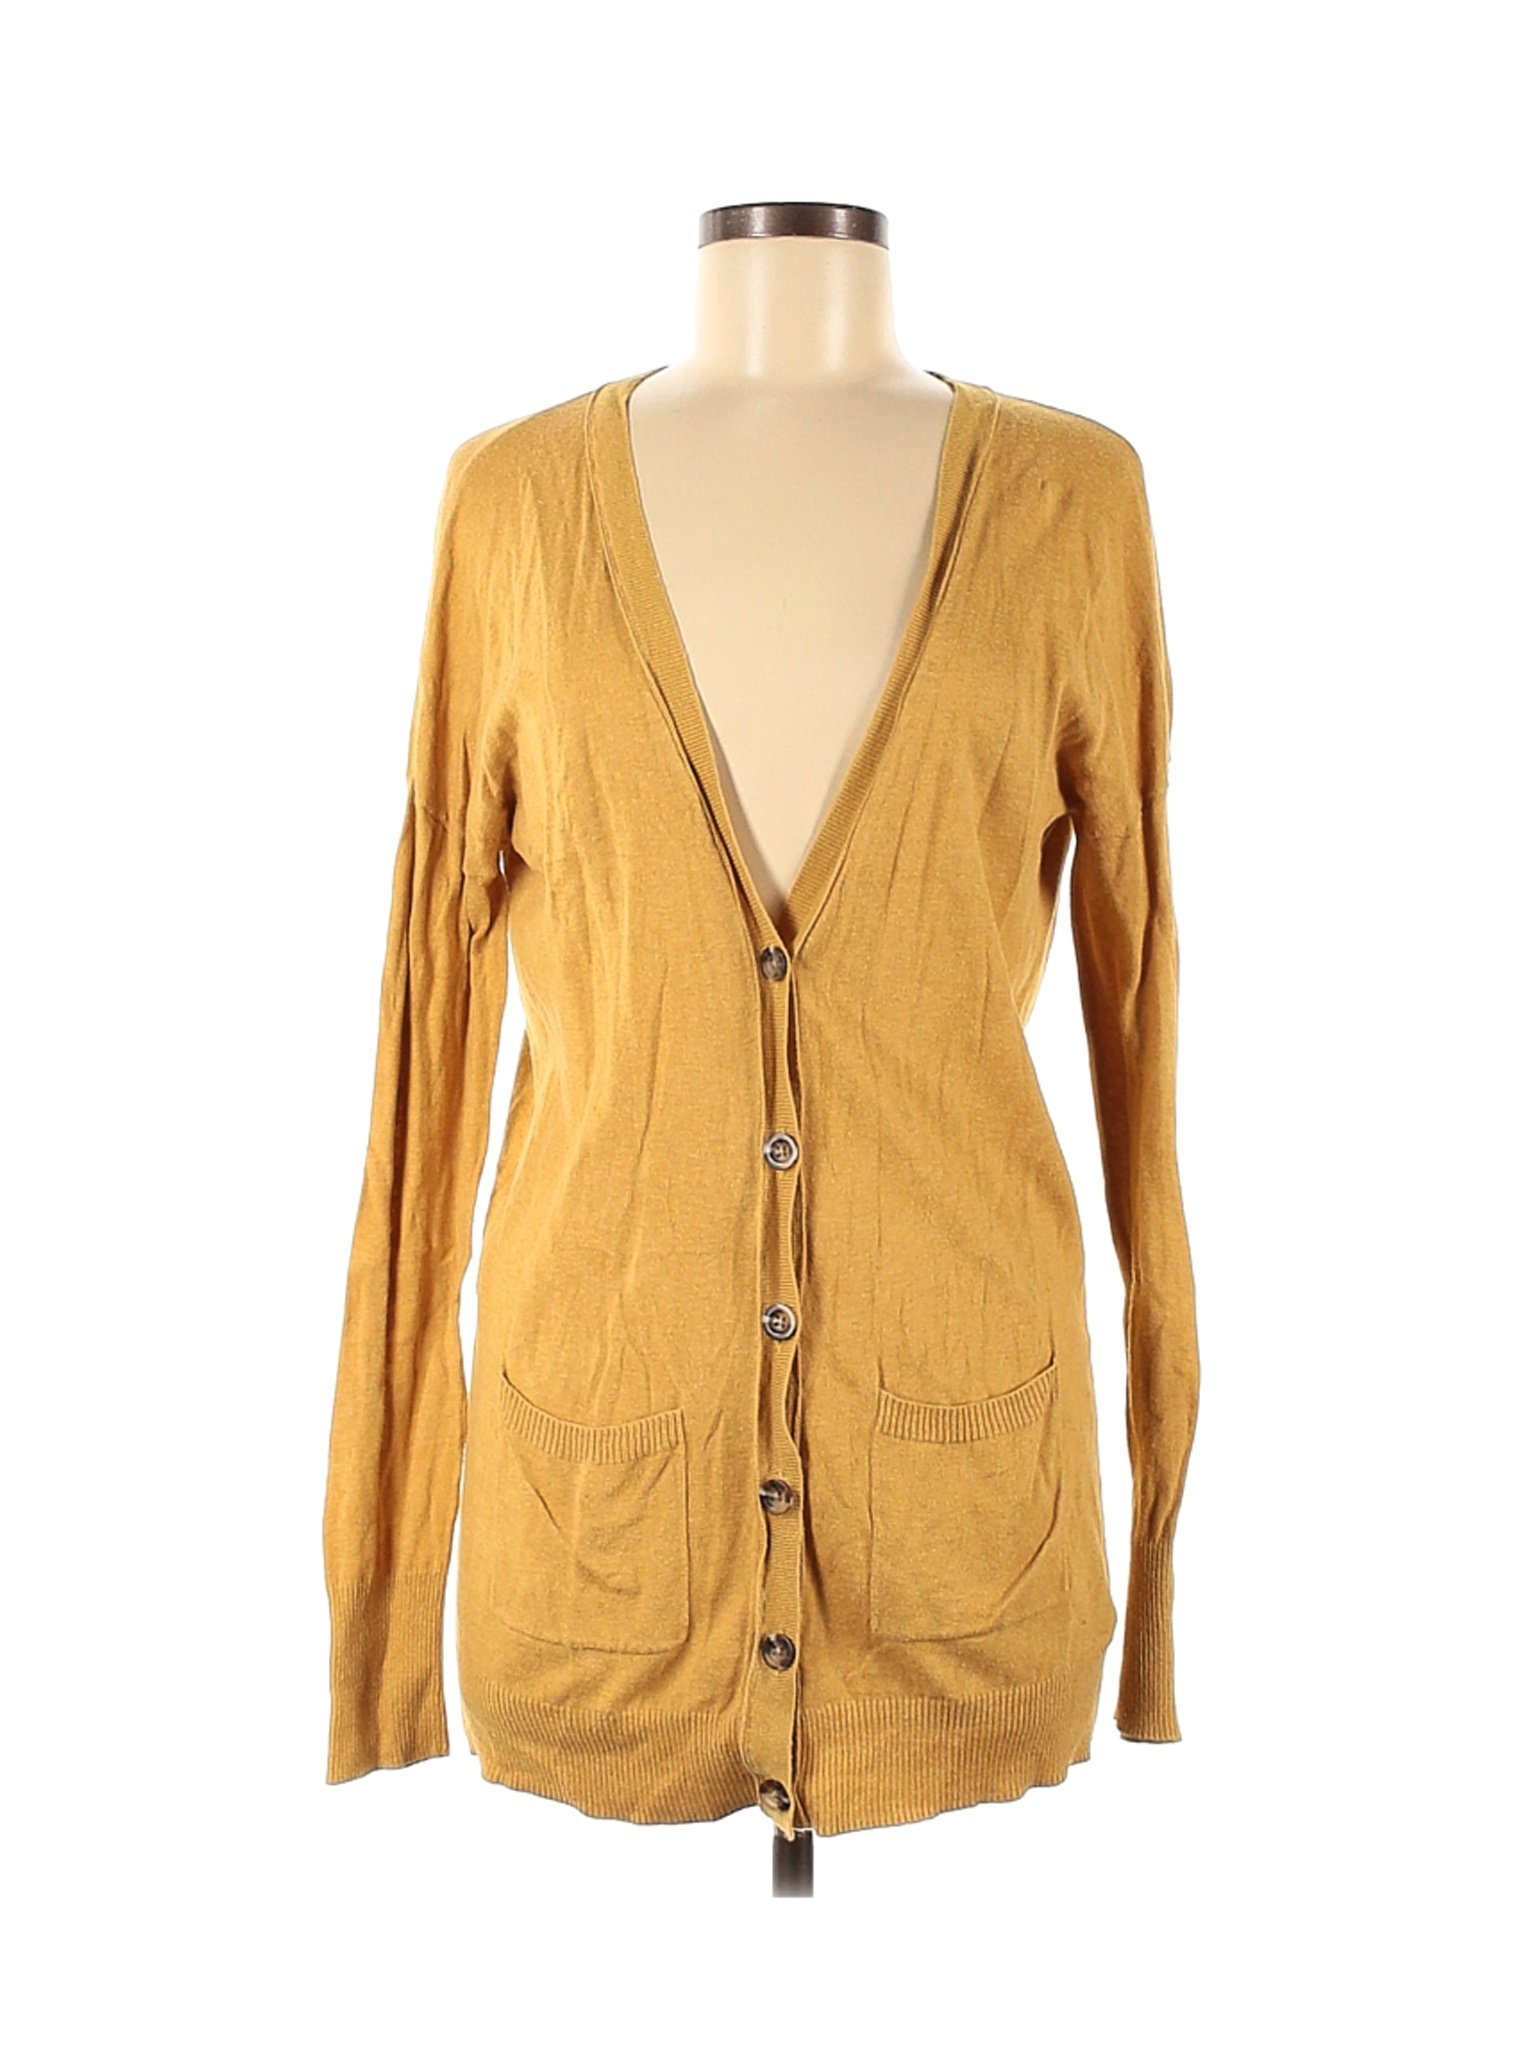 Mossimo Supply Co. Women Yellow Cardigan M | eBay